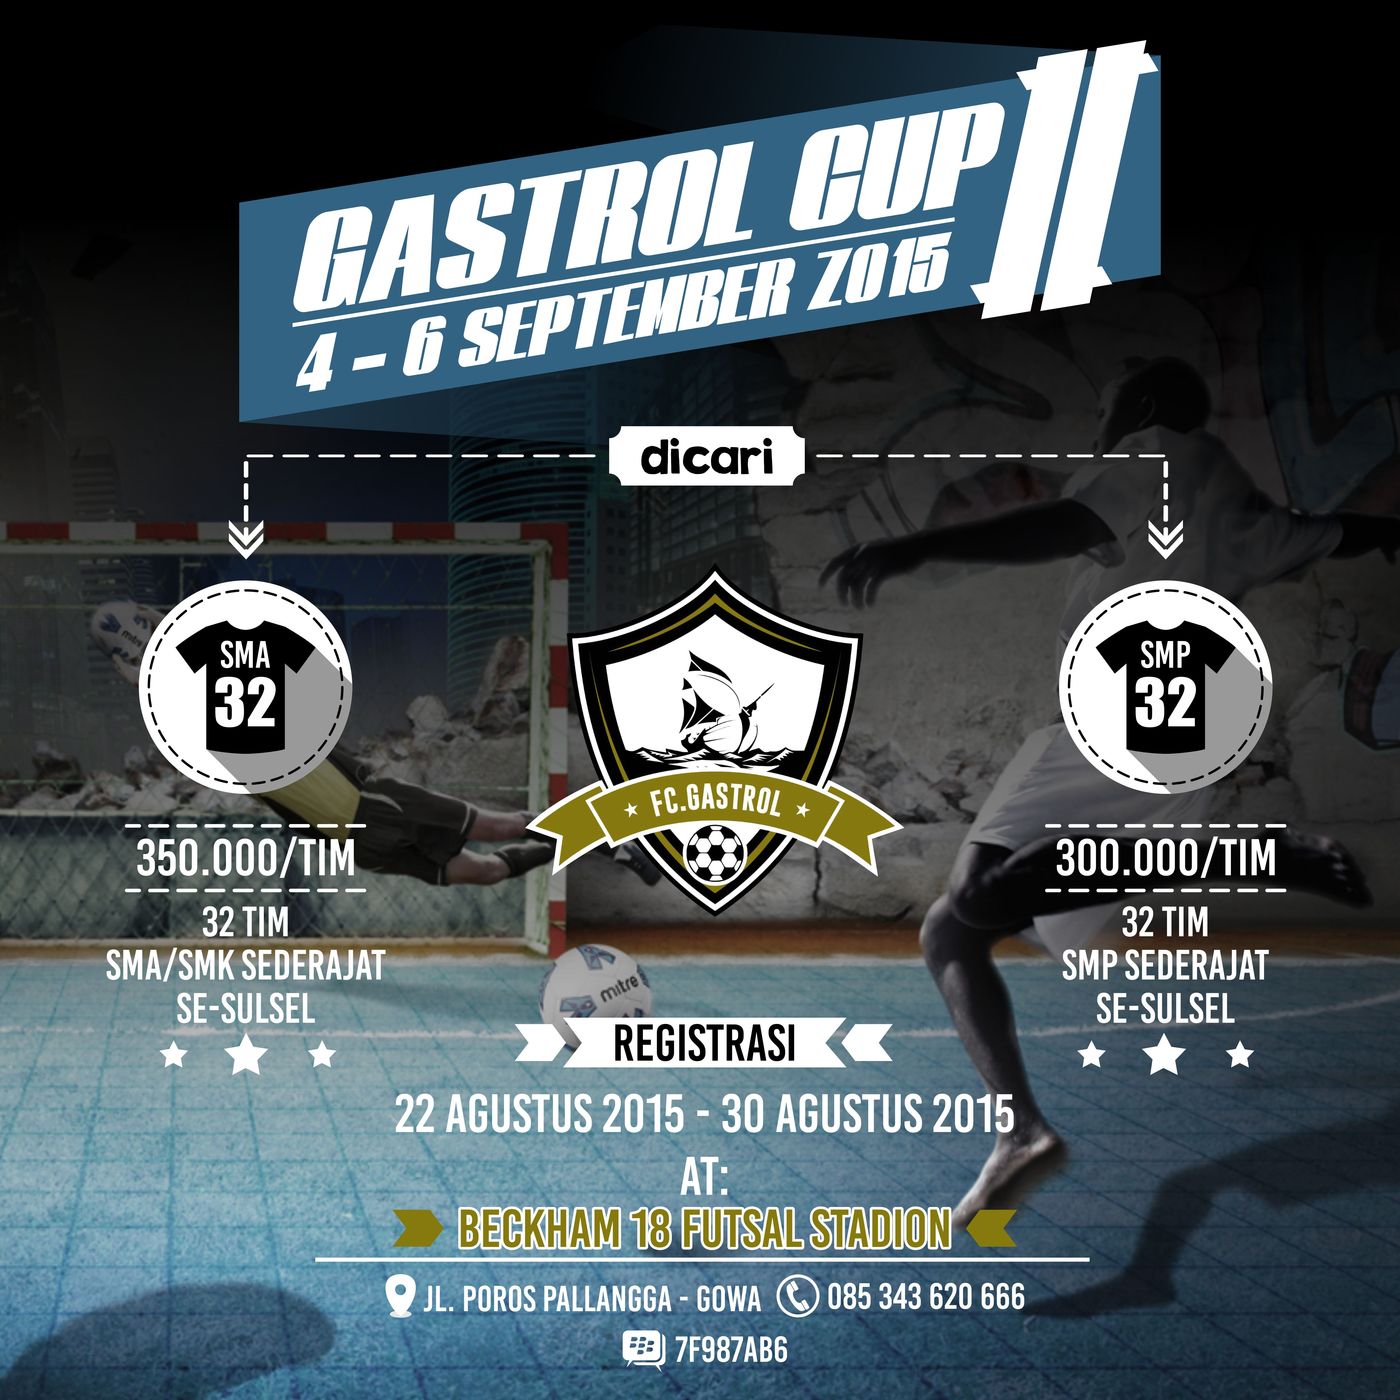 Turnamen Futsal Gastrol Cup II